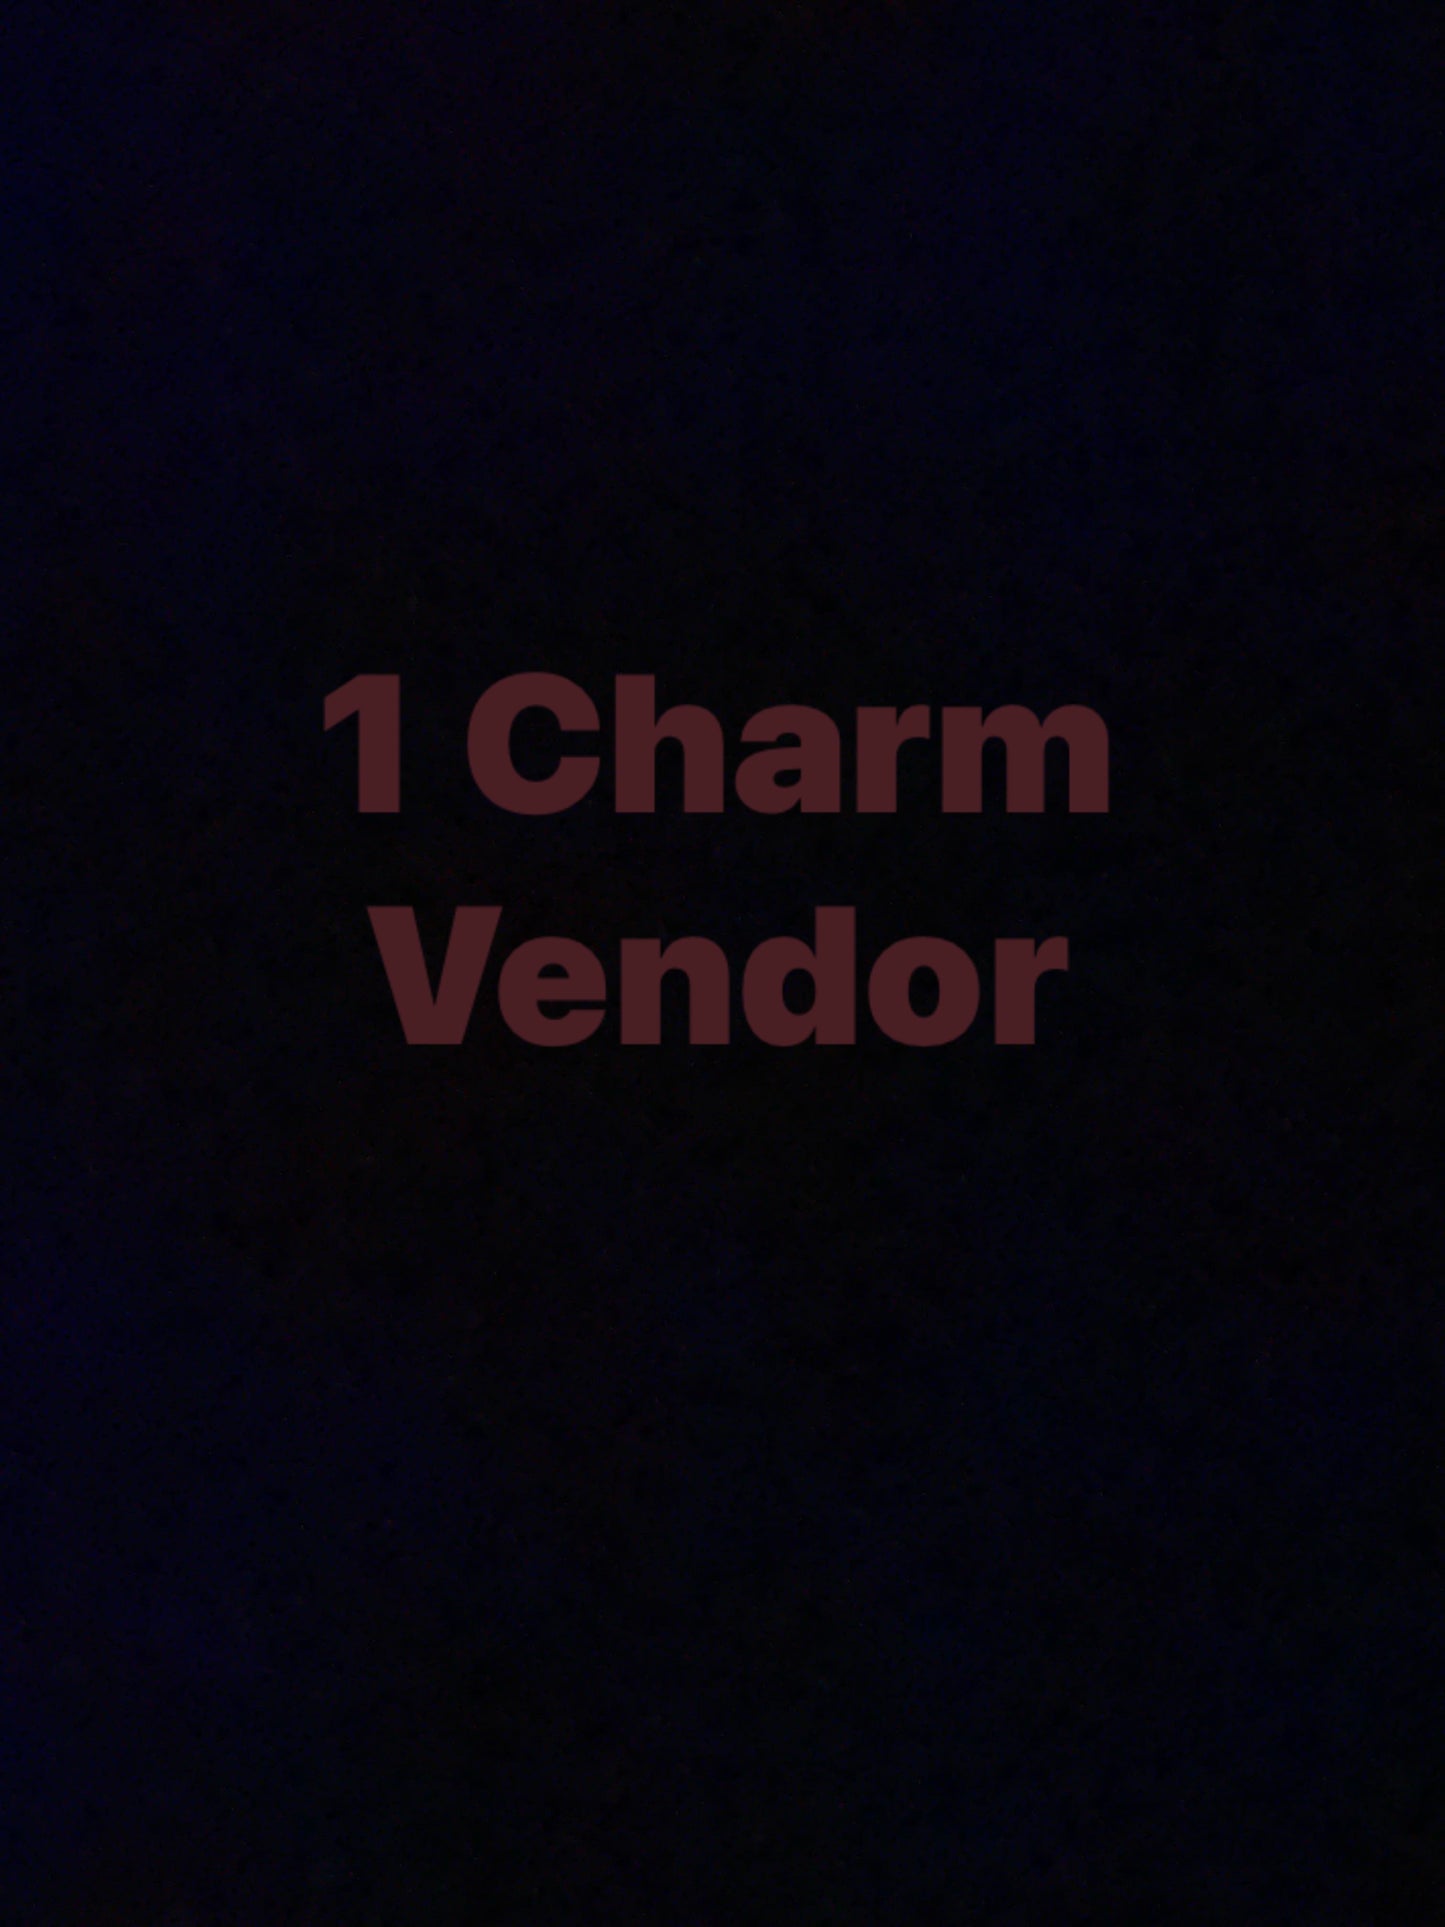 1 Charm Vendor